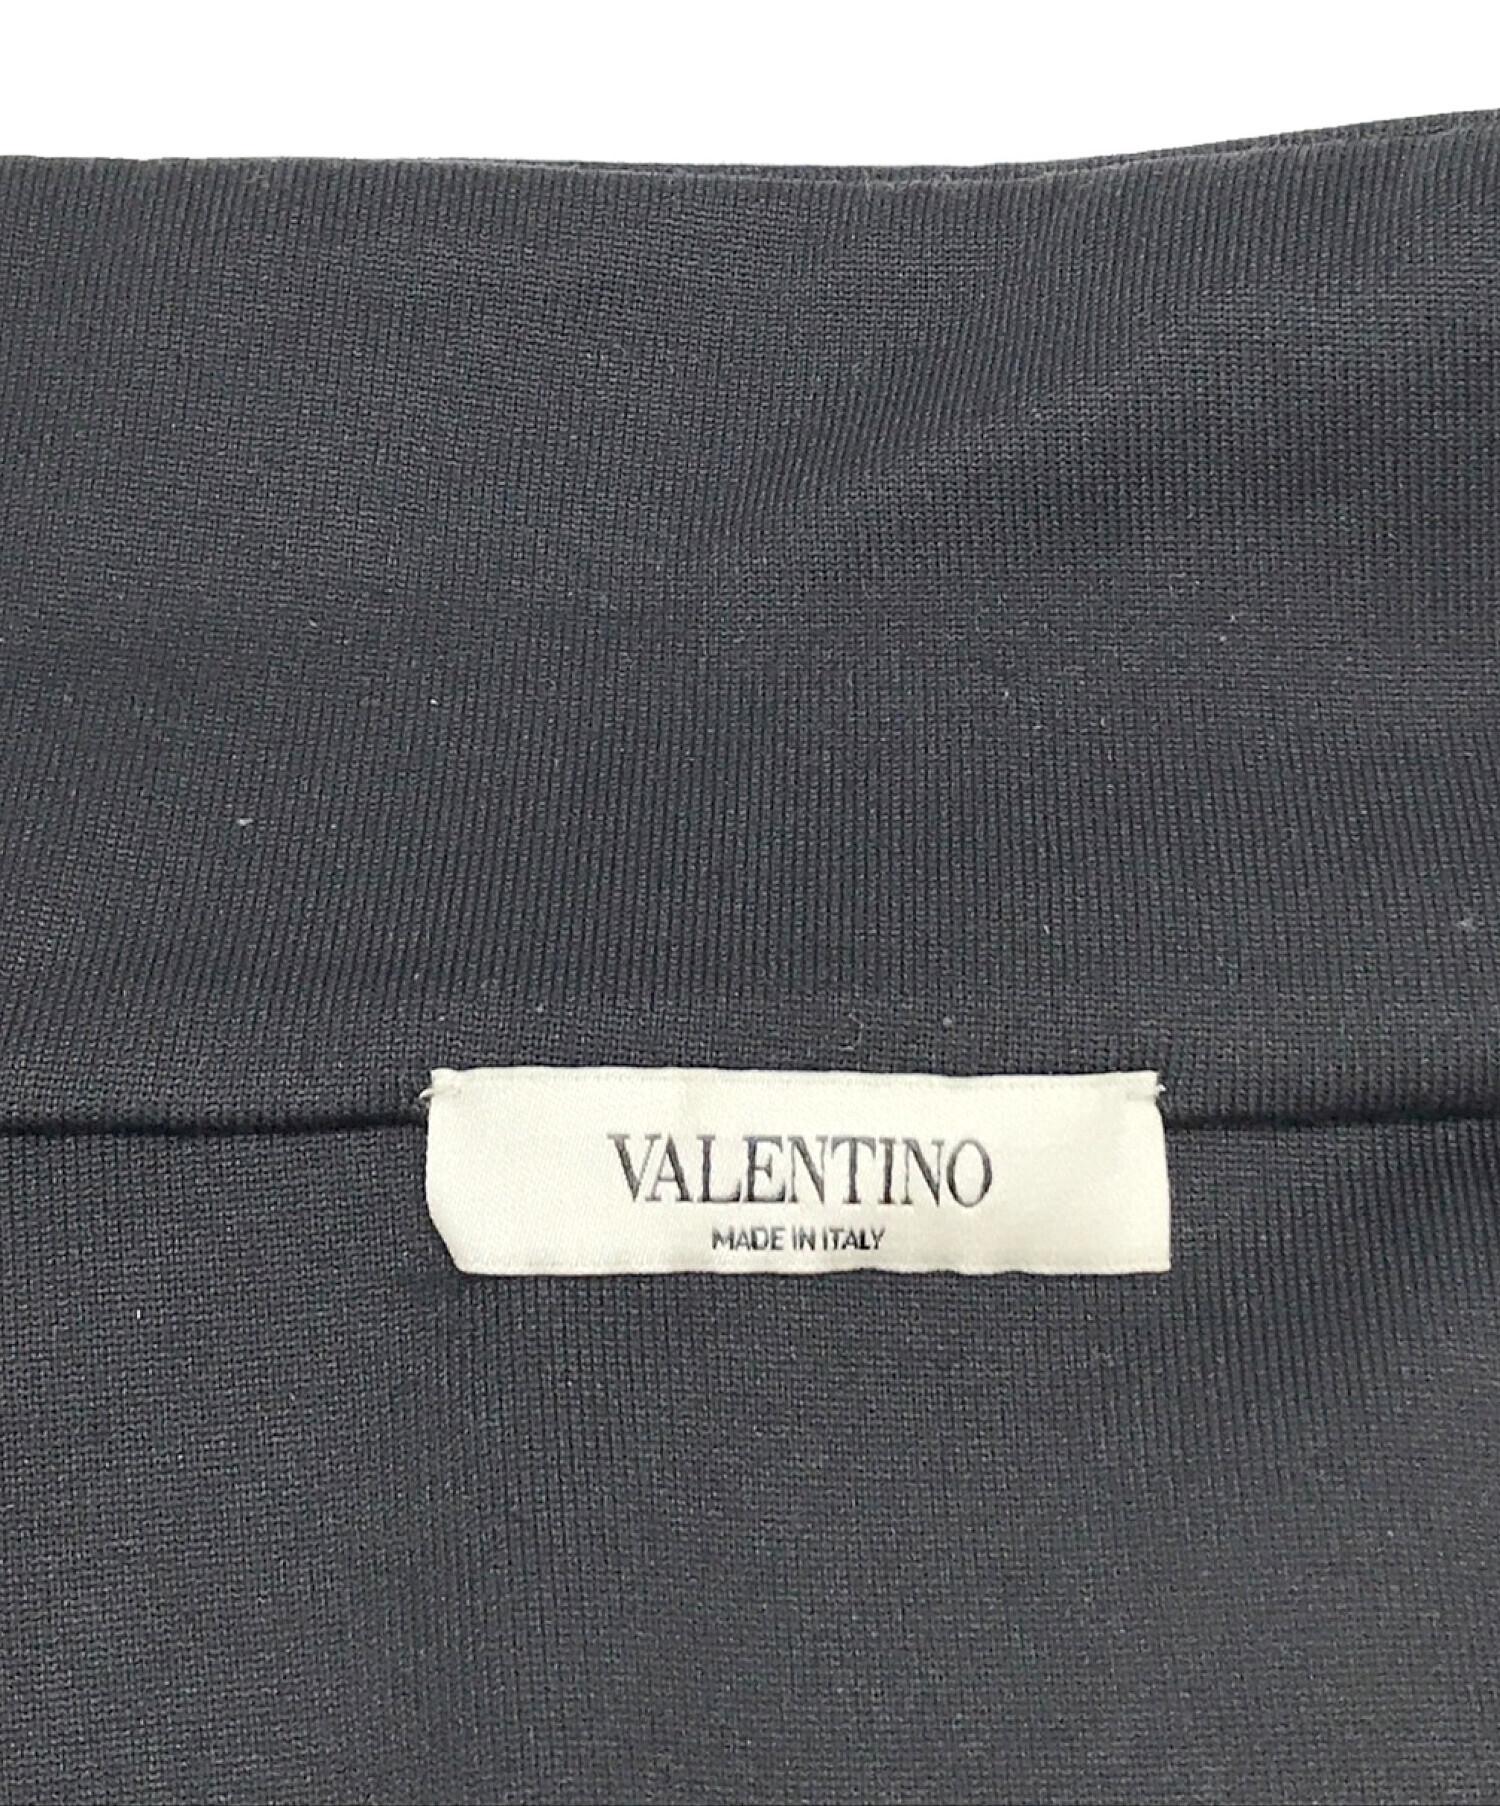 VALENTINO (ヴァレンティノ) トラックジャケット ブラック サイズ:M